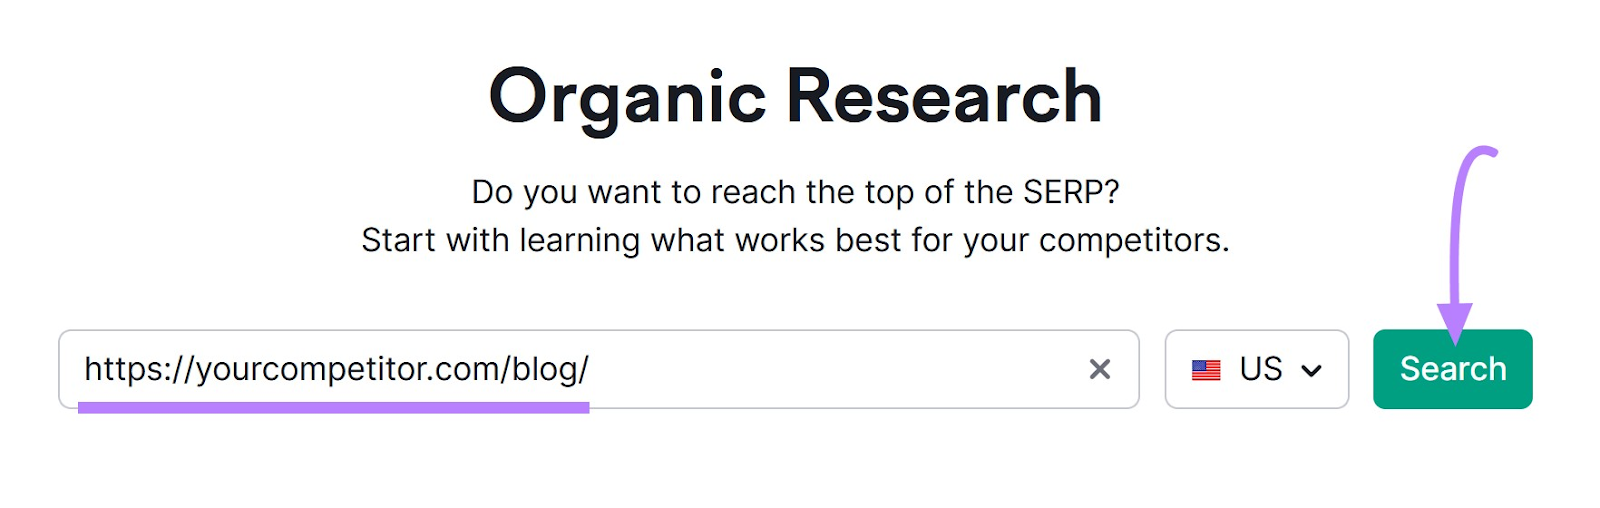 Organic Research tool search bar